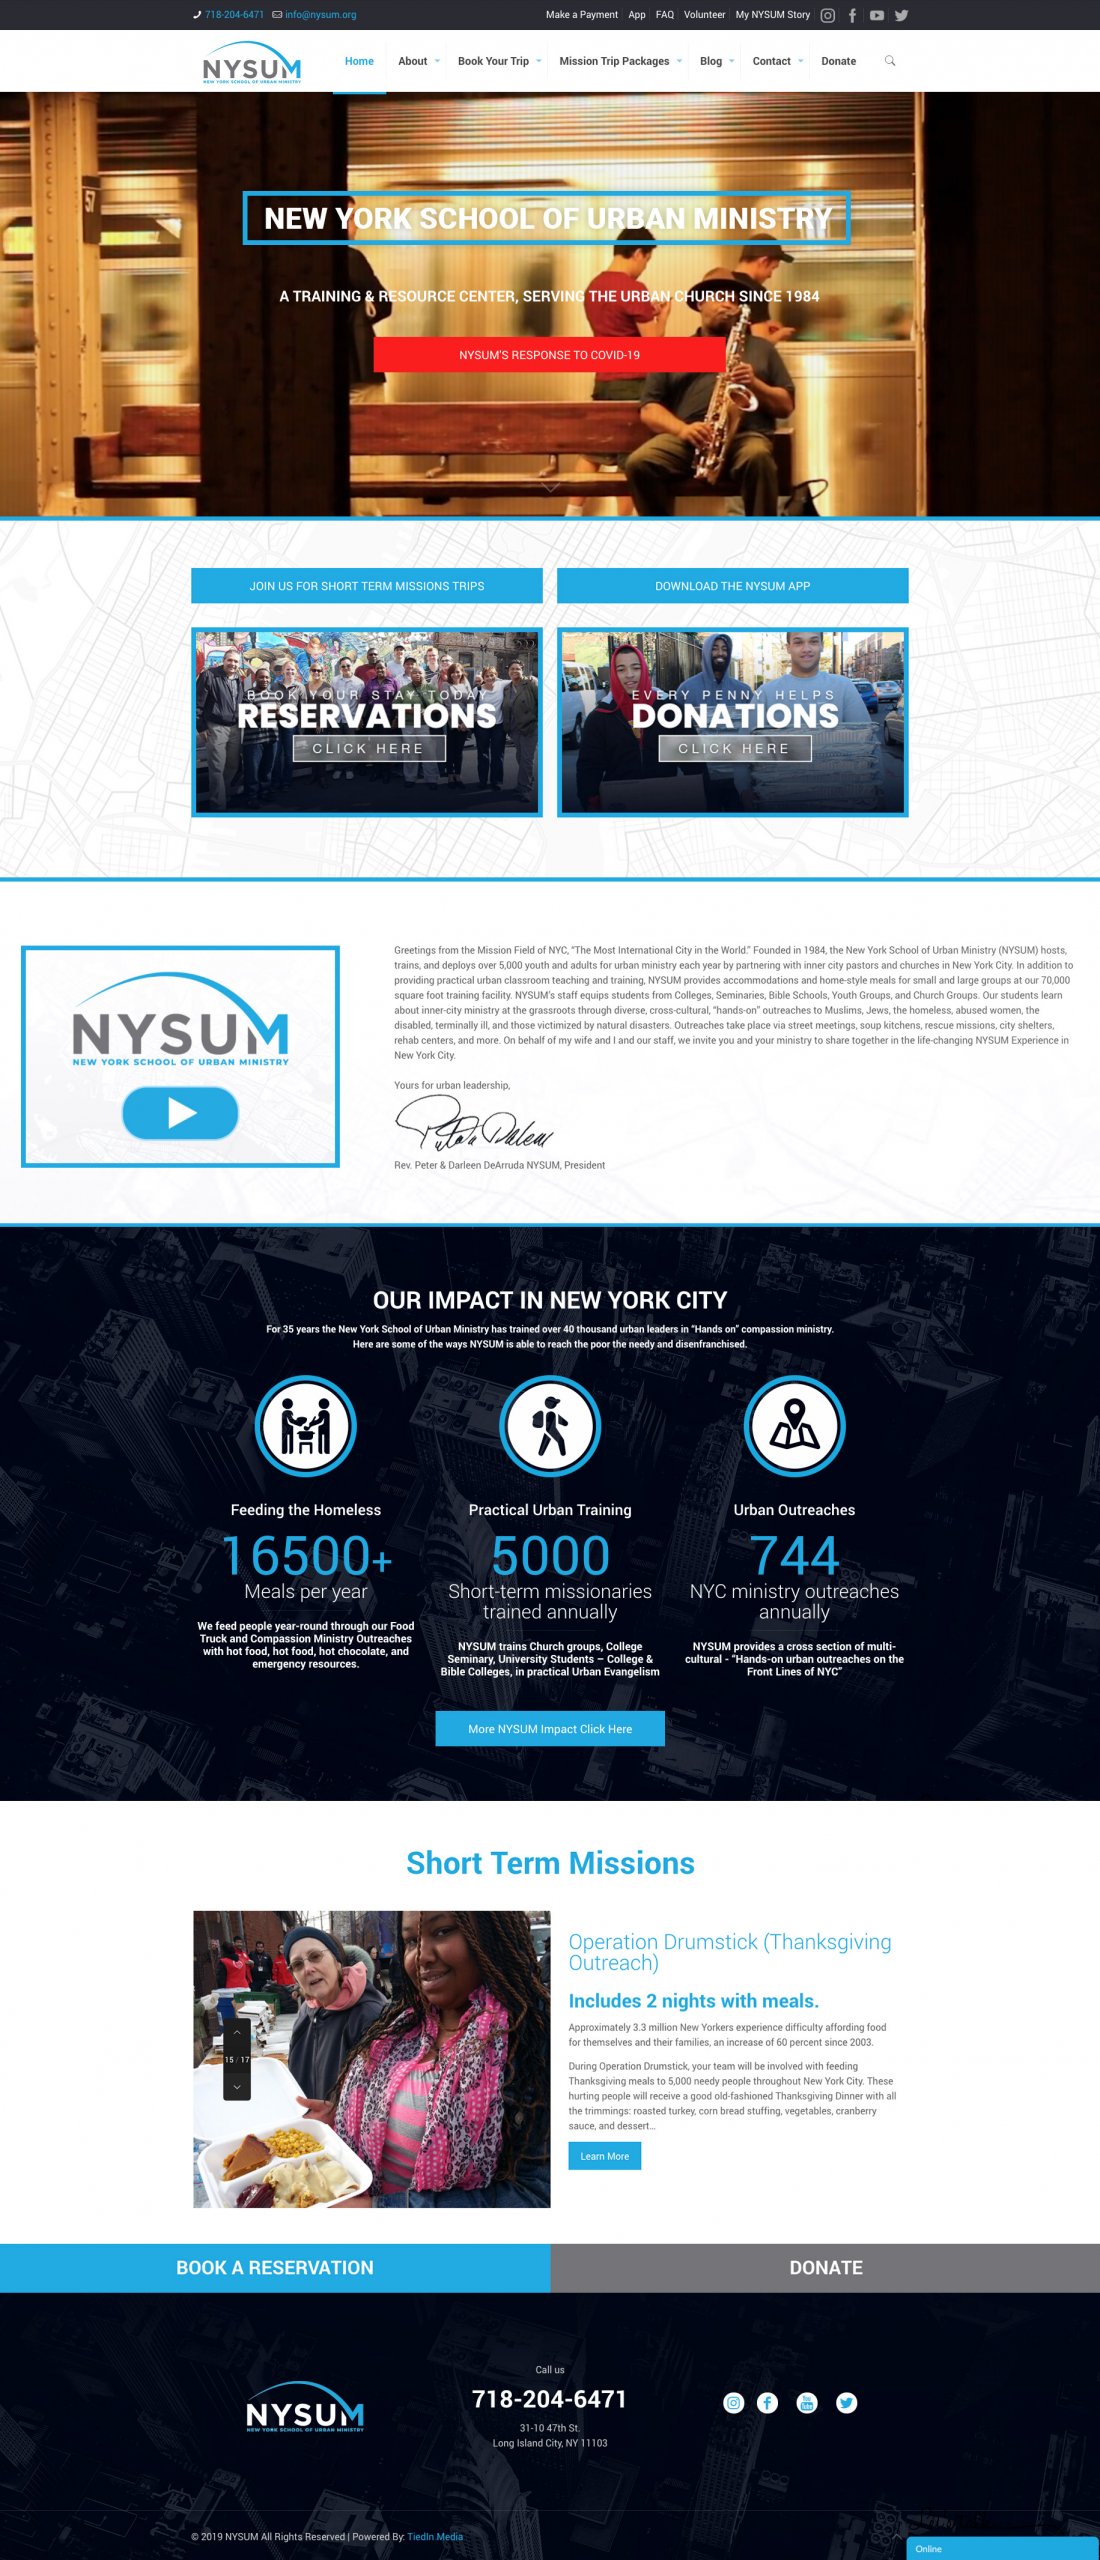 nysum-website-design-Homepage